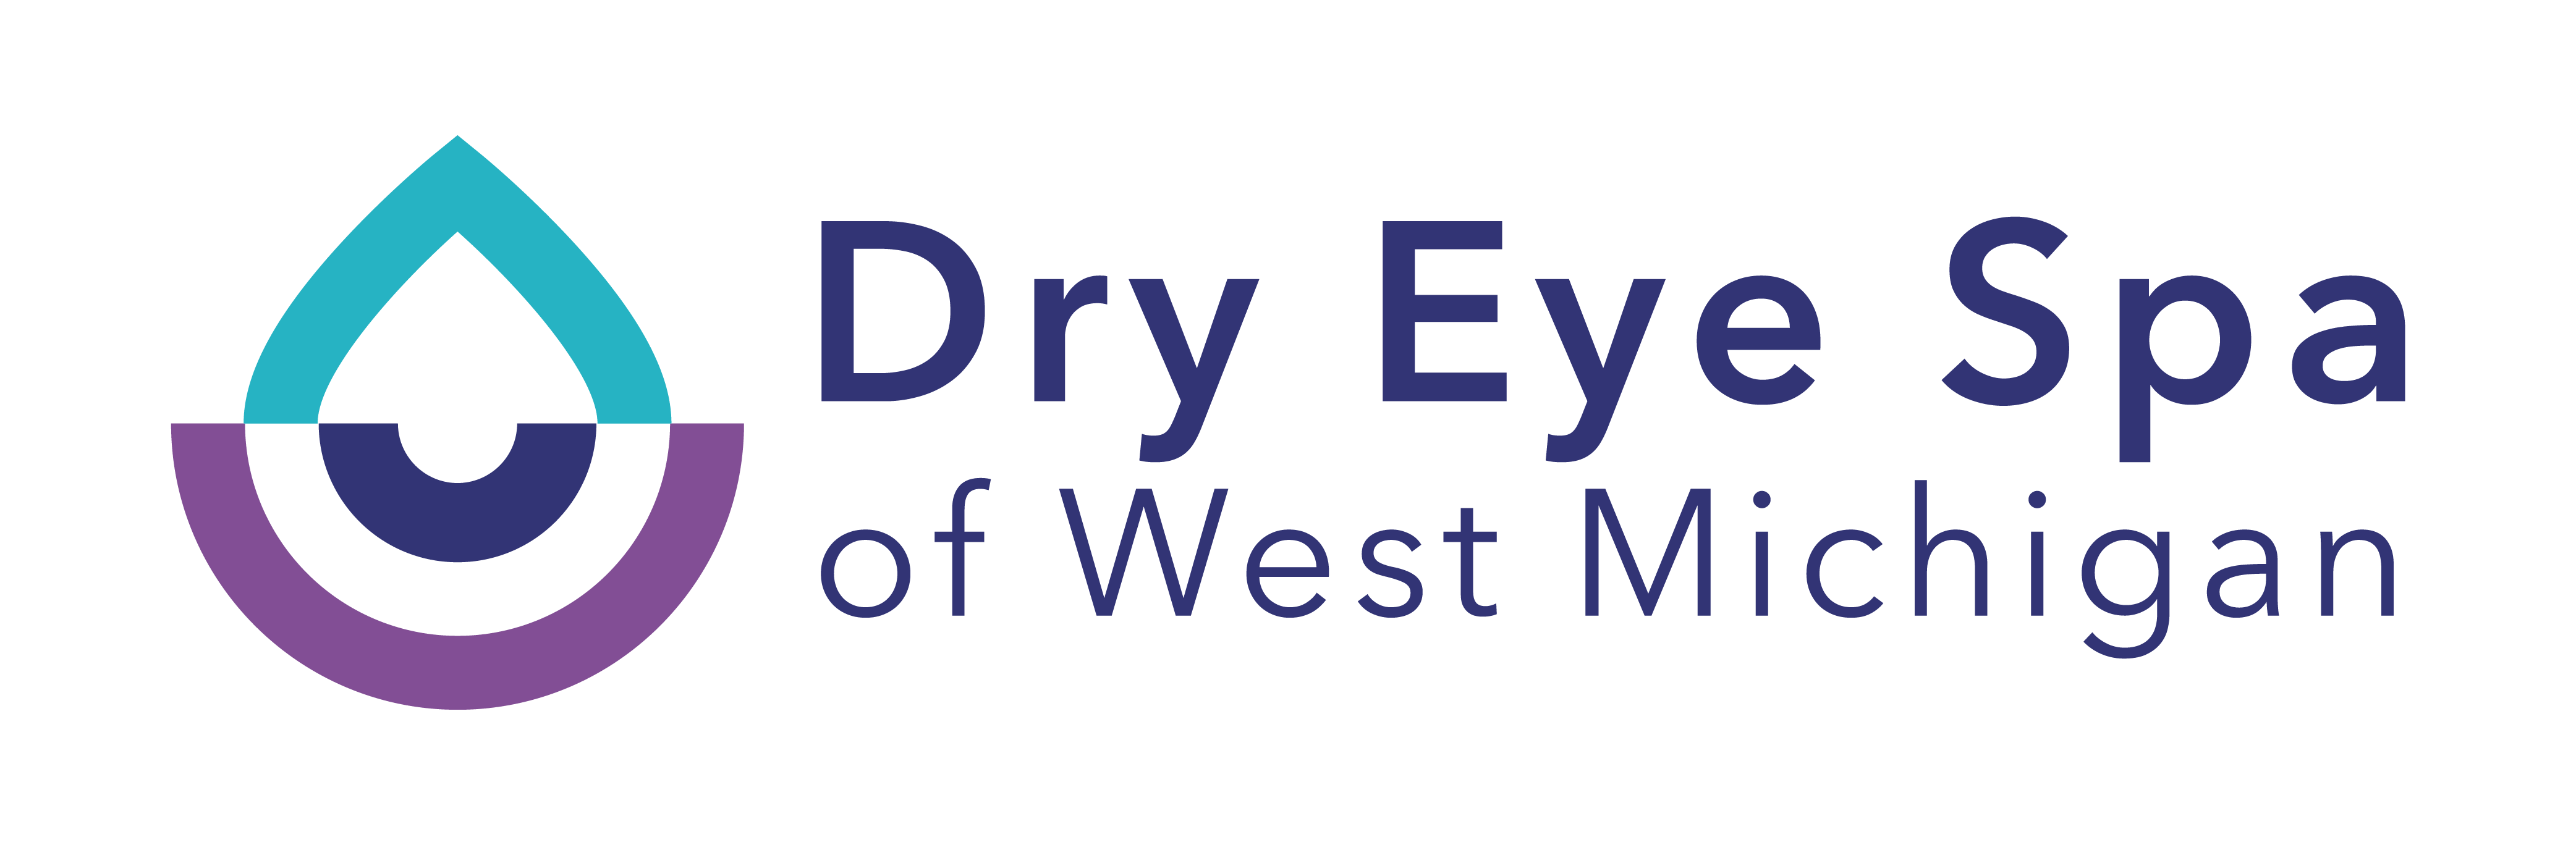 Dry Eye Spa of West Michigan